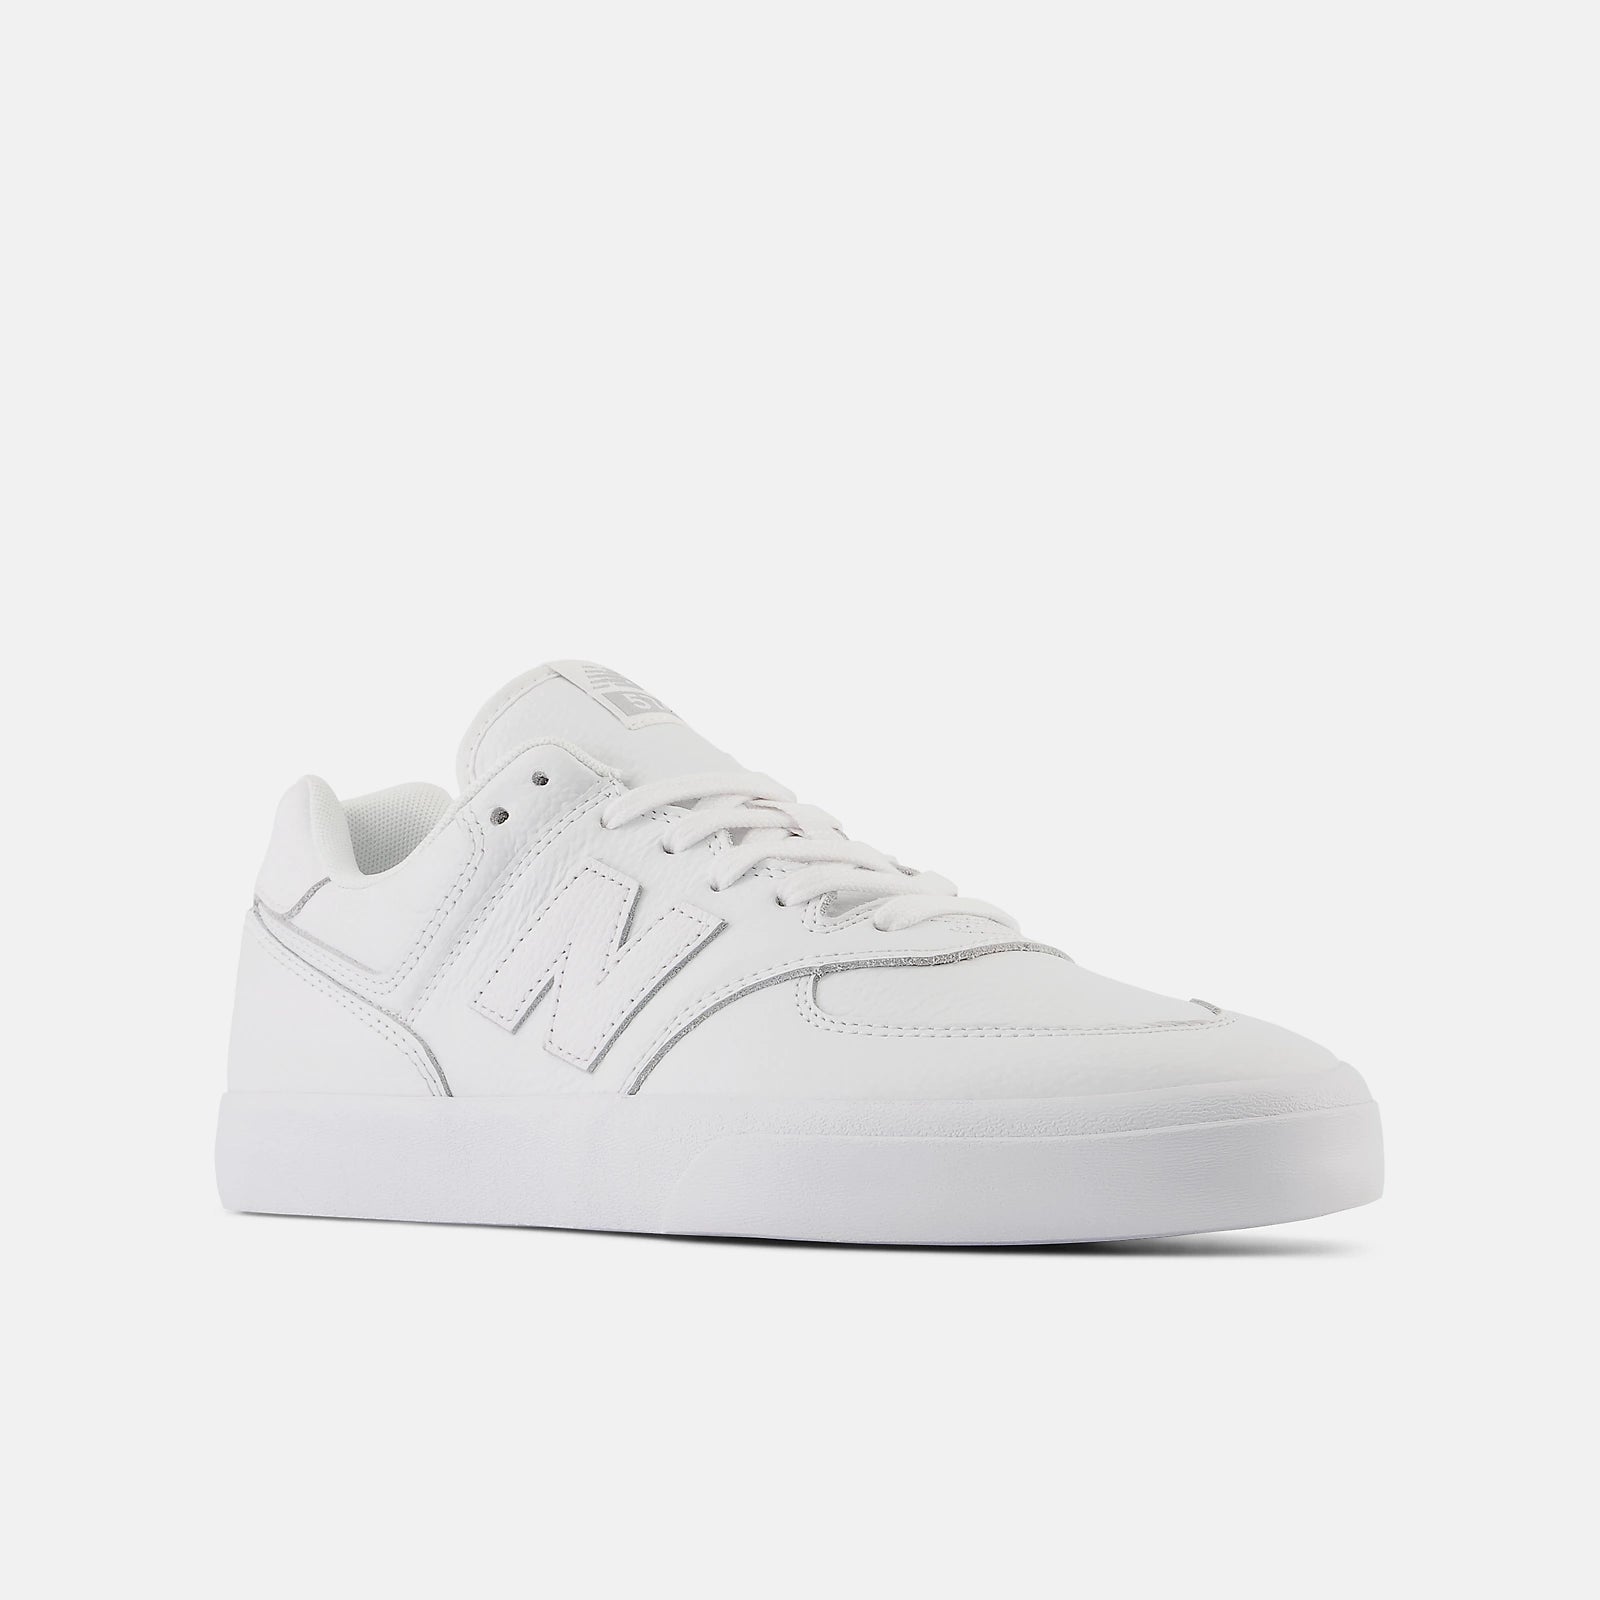 New Balance 574 - White Leather